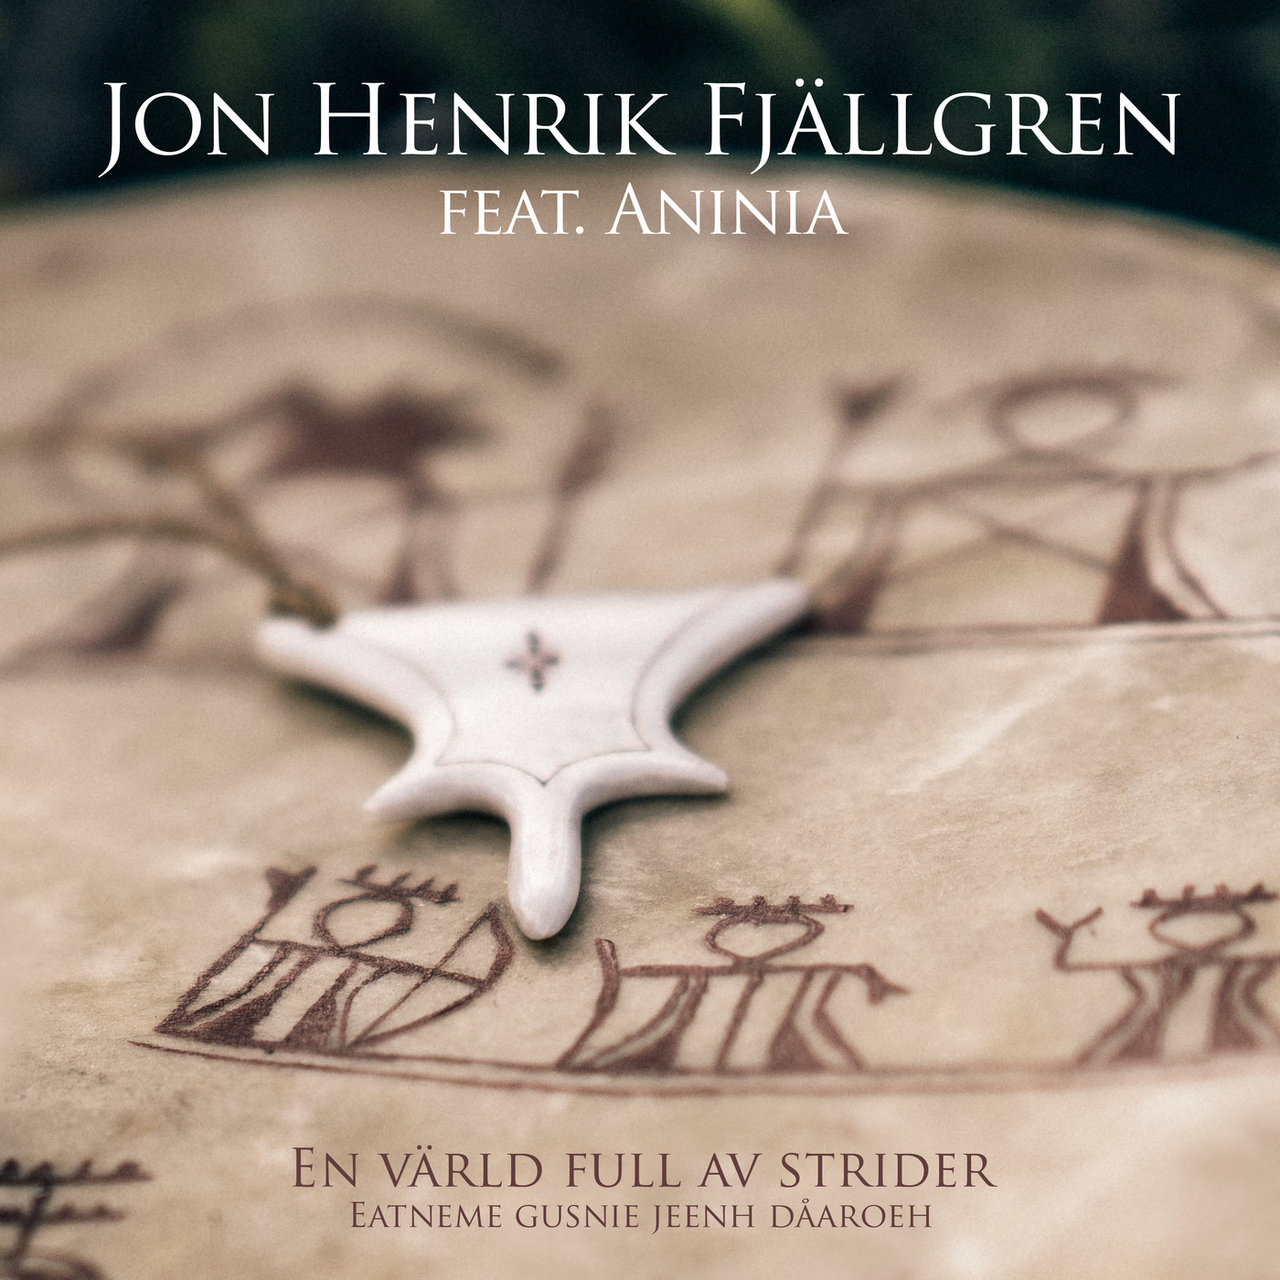 Jon Henrik Fjällgren ft. featuring Aninia En värld full av strider (Eatneme gusnie jeenh dåaroeh) cover artwork